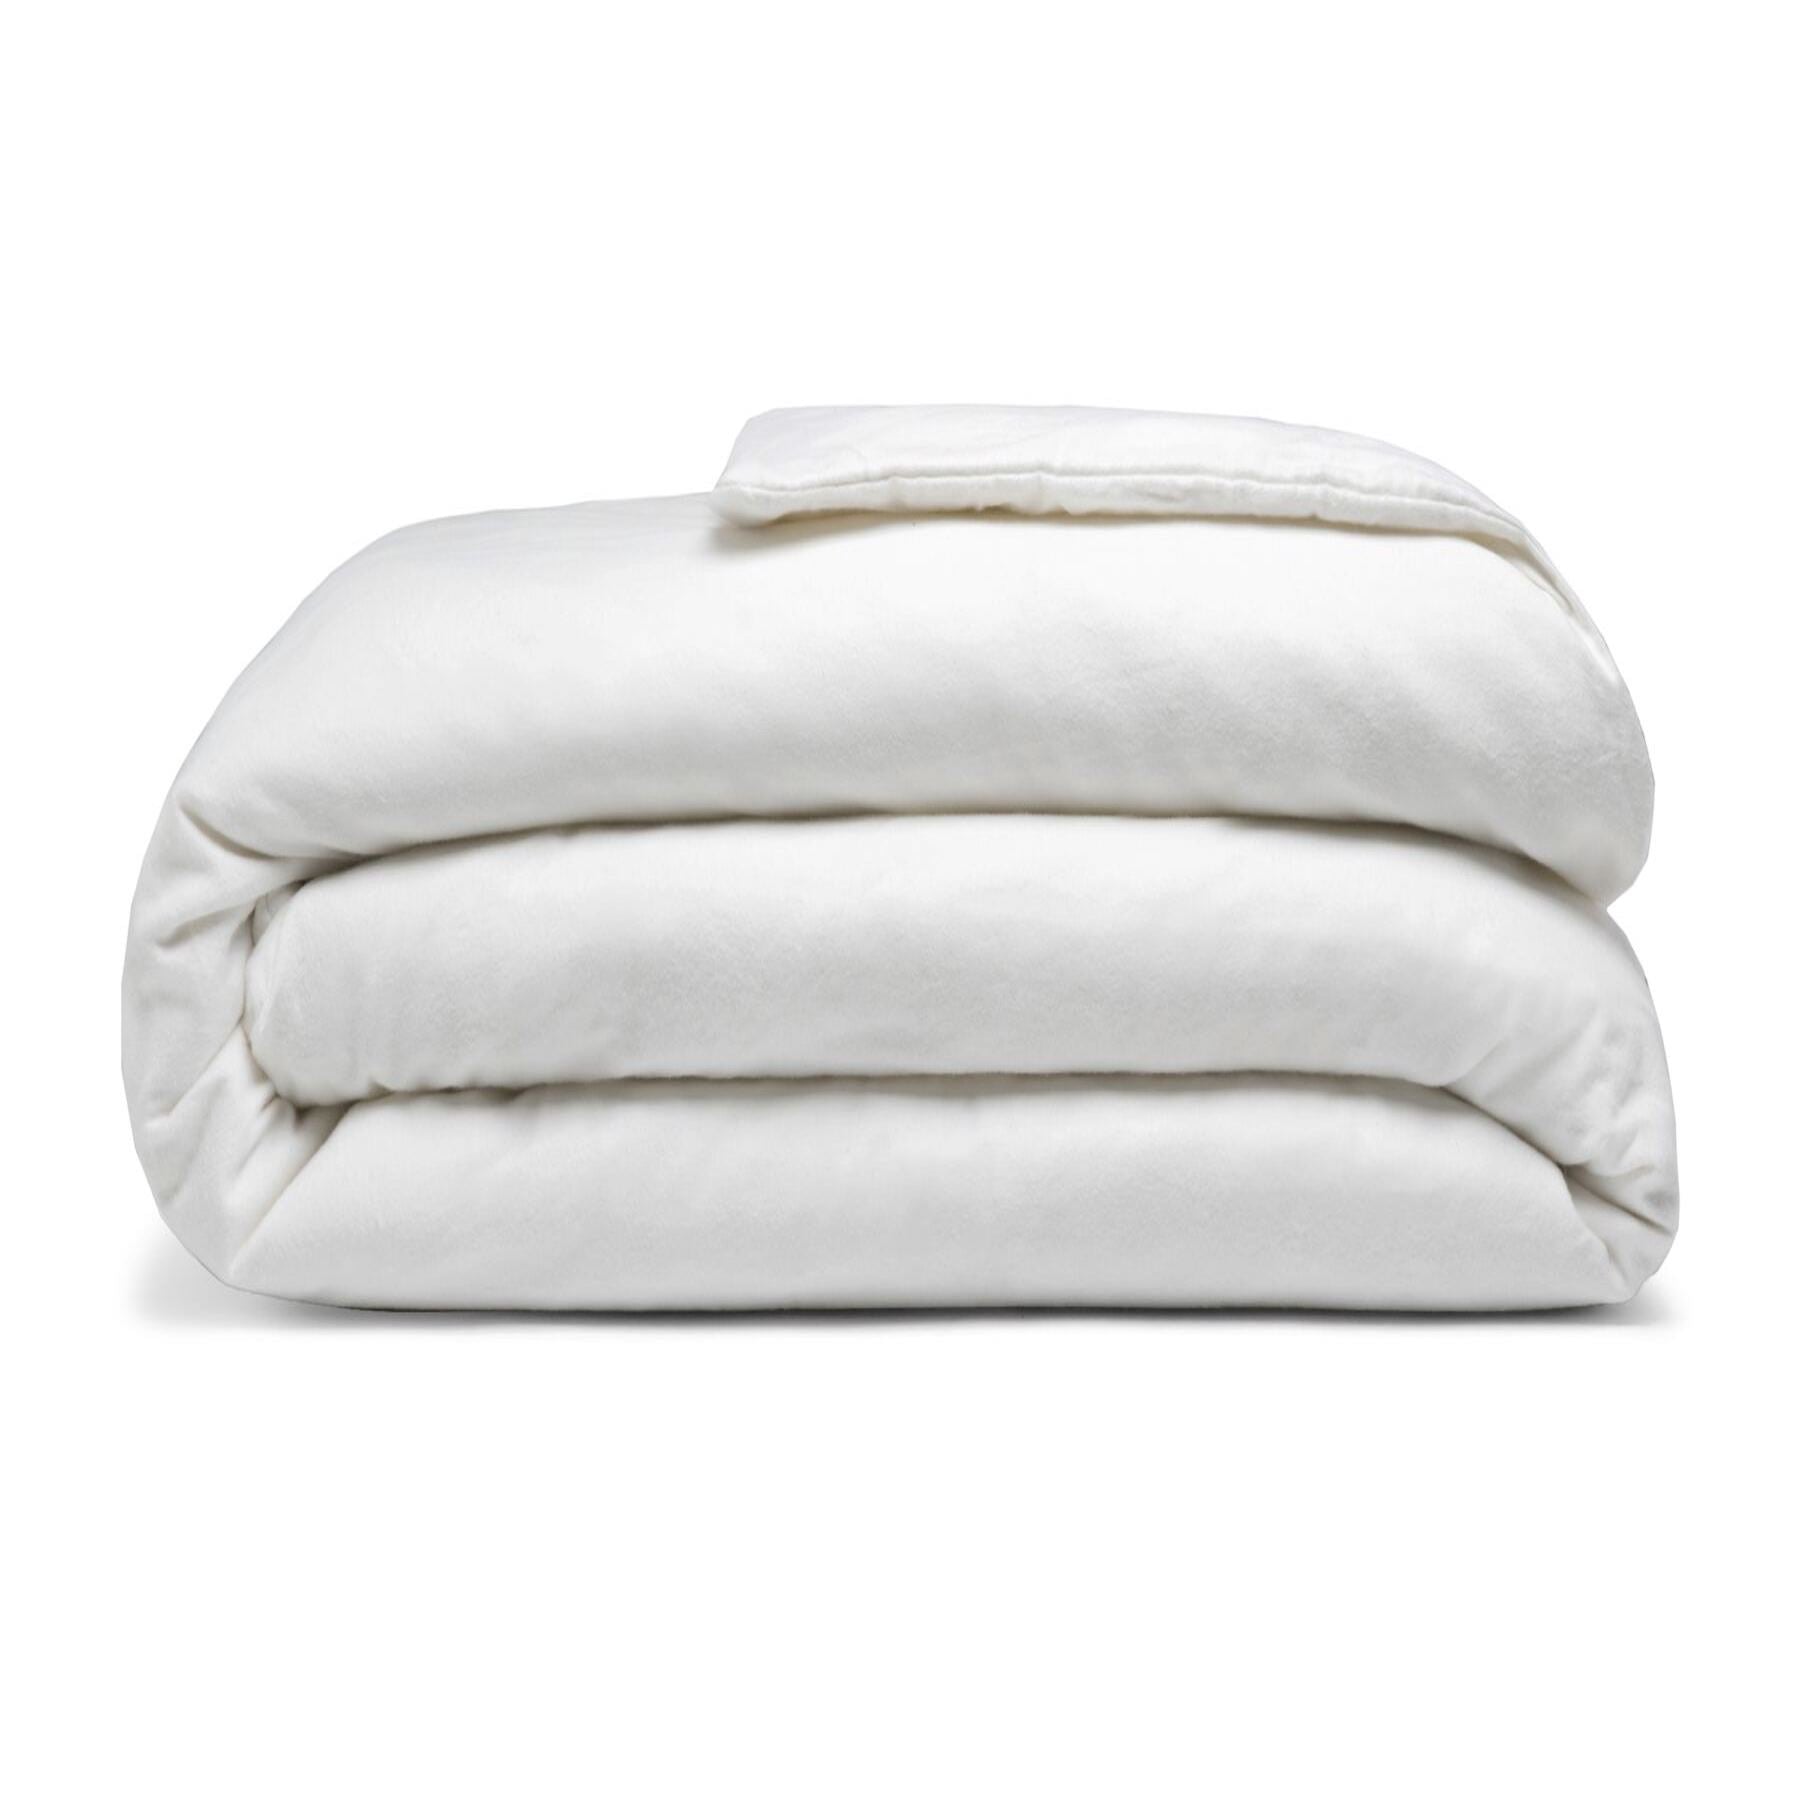 Belledorm Brushed Cotton Duvet Cover Set - White